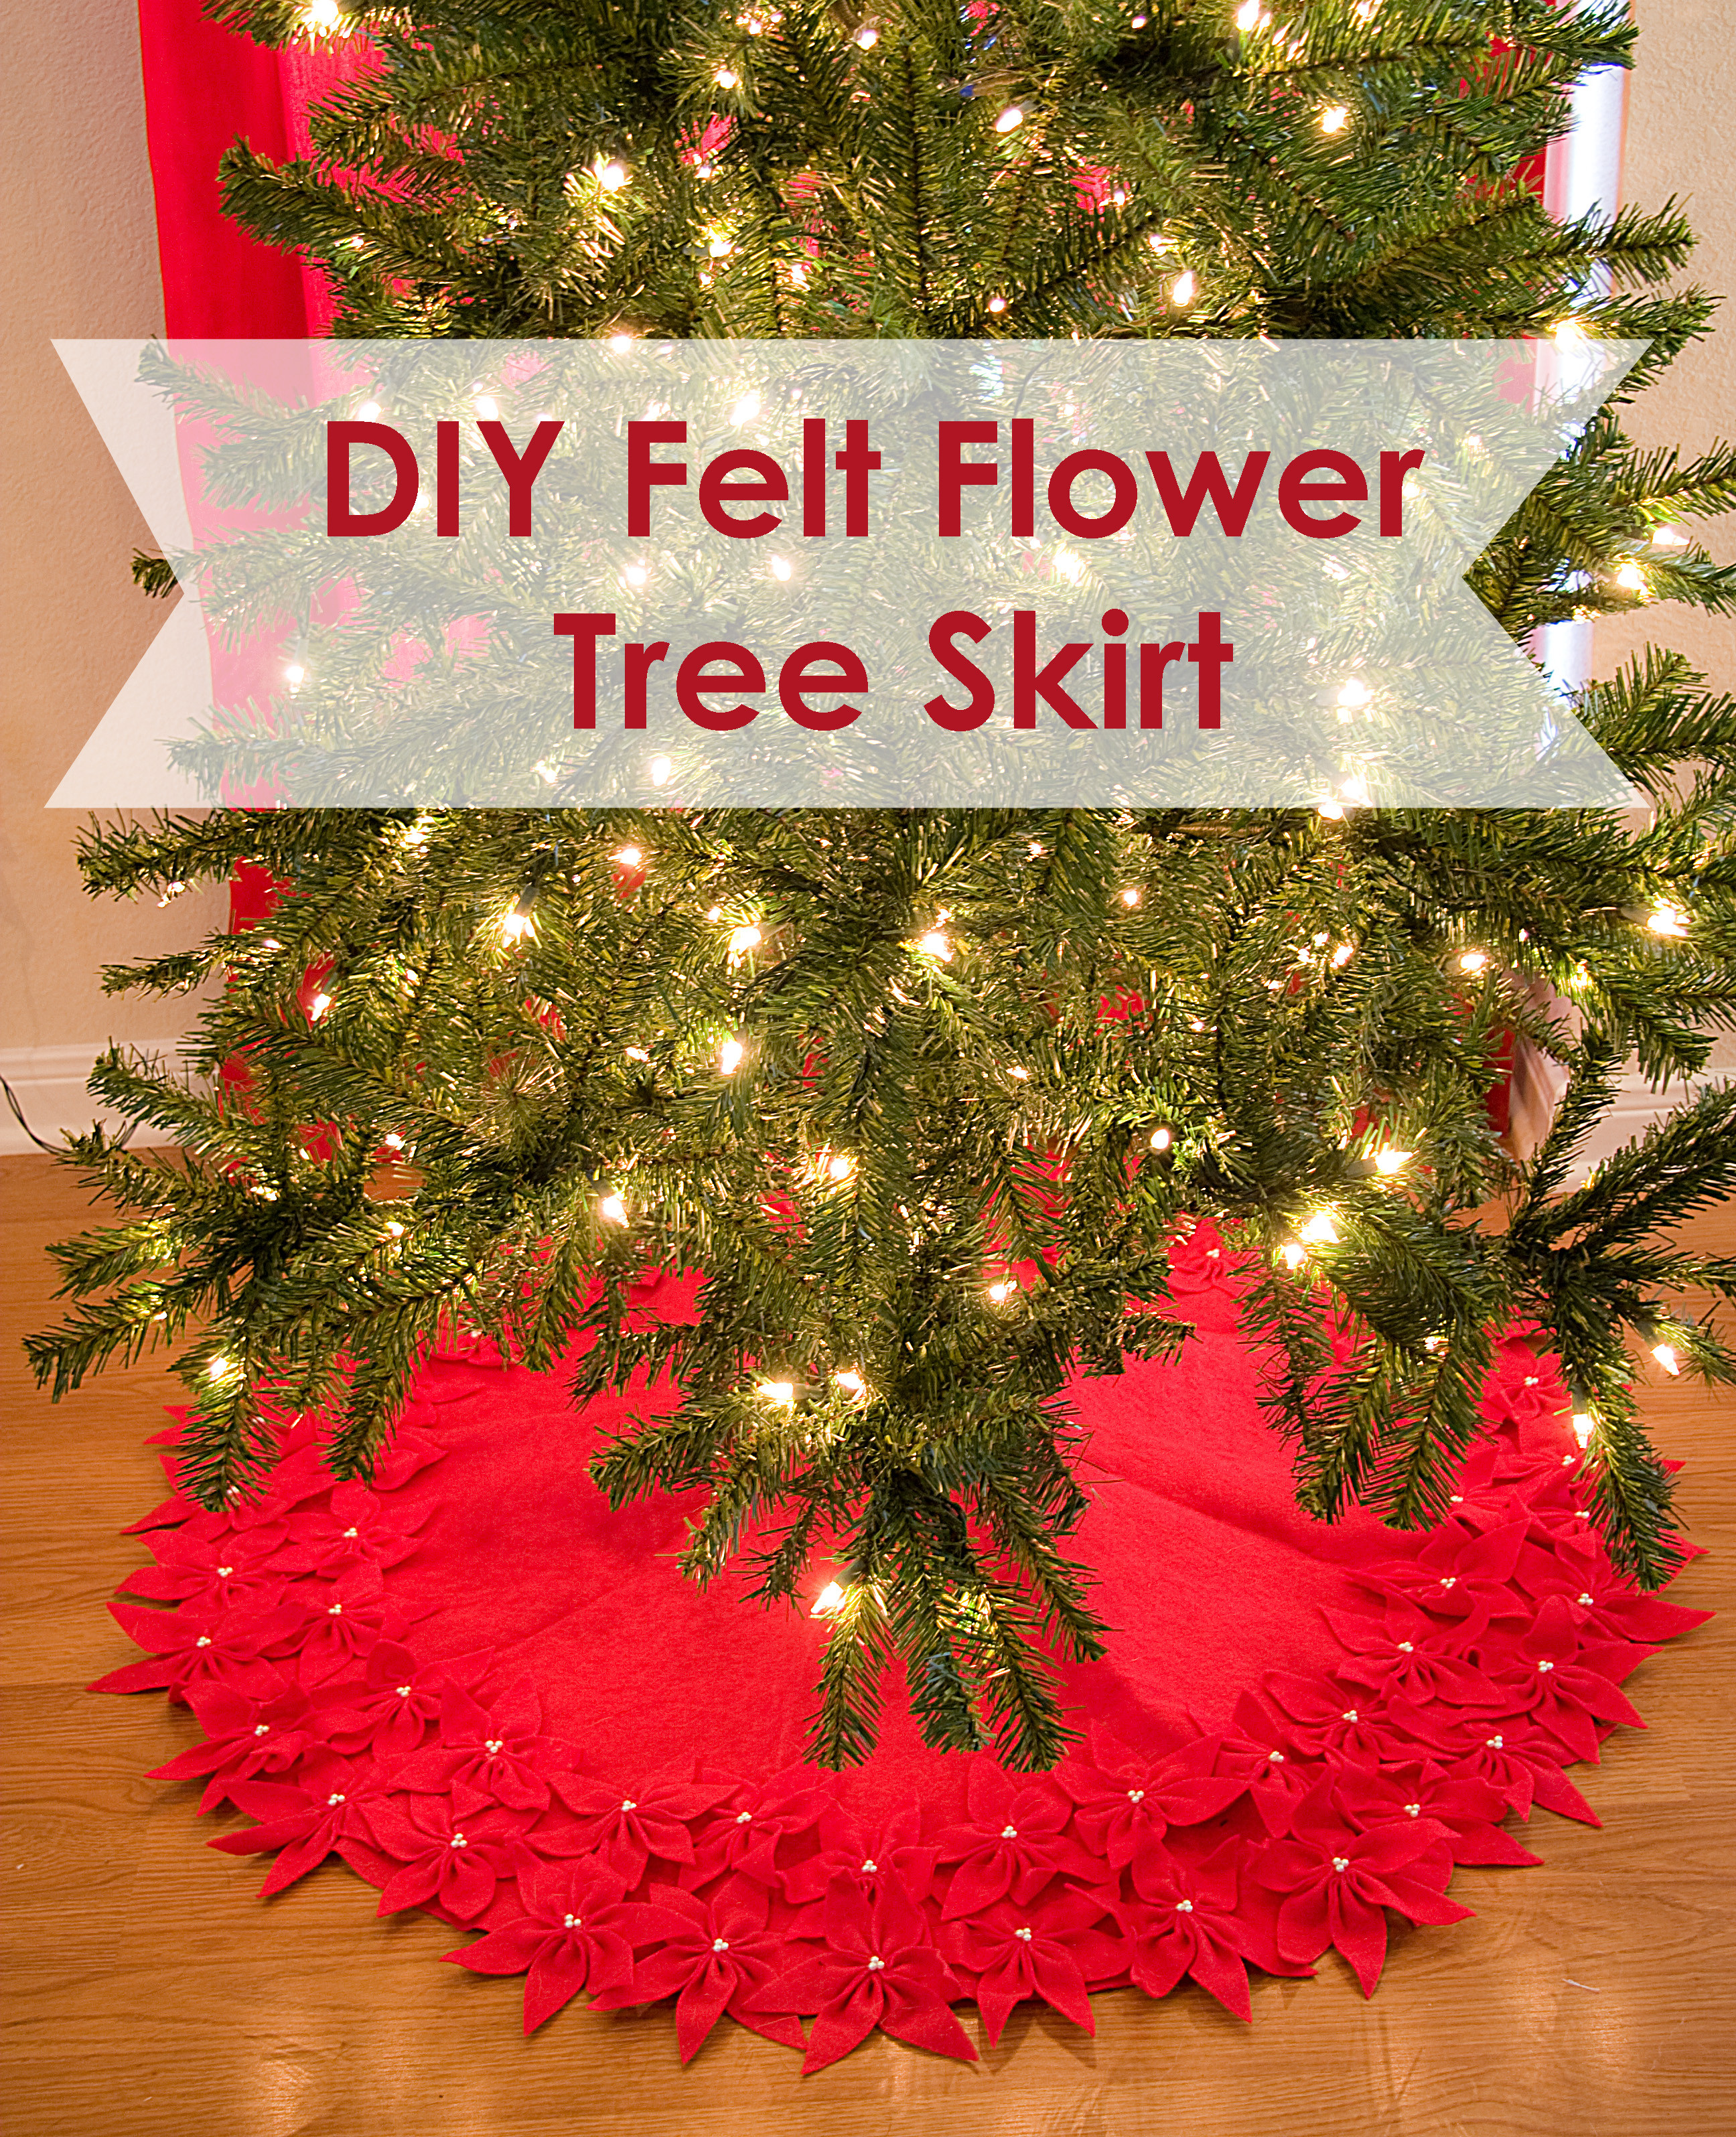 Best ideas about DIY Tree Skirt
. Save or Pin Beautiful DIY Felt Flower Tree Skirt Now.